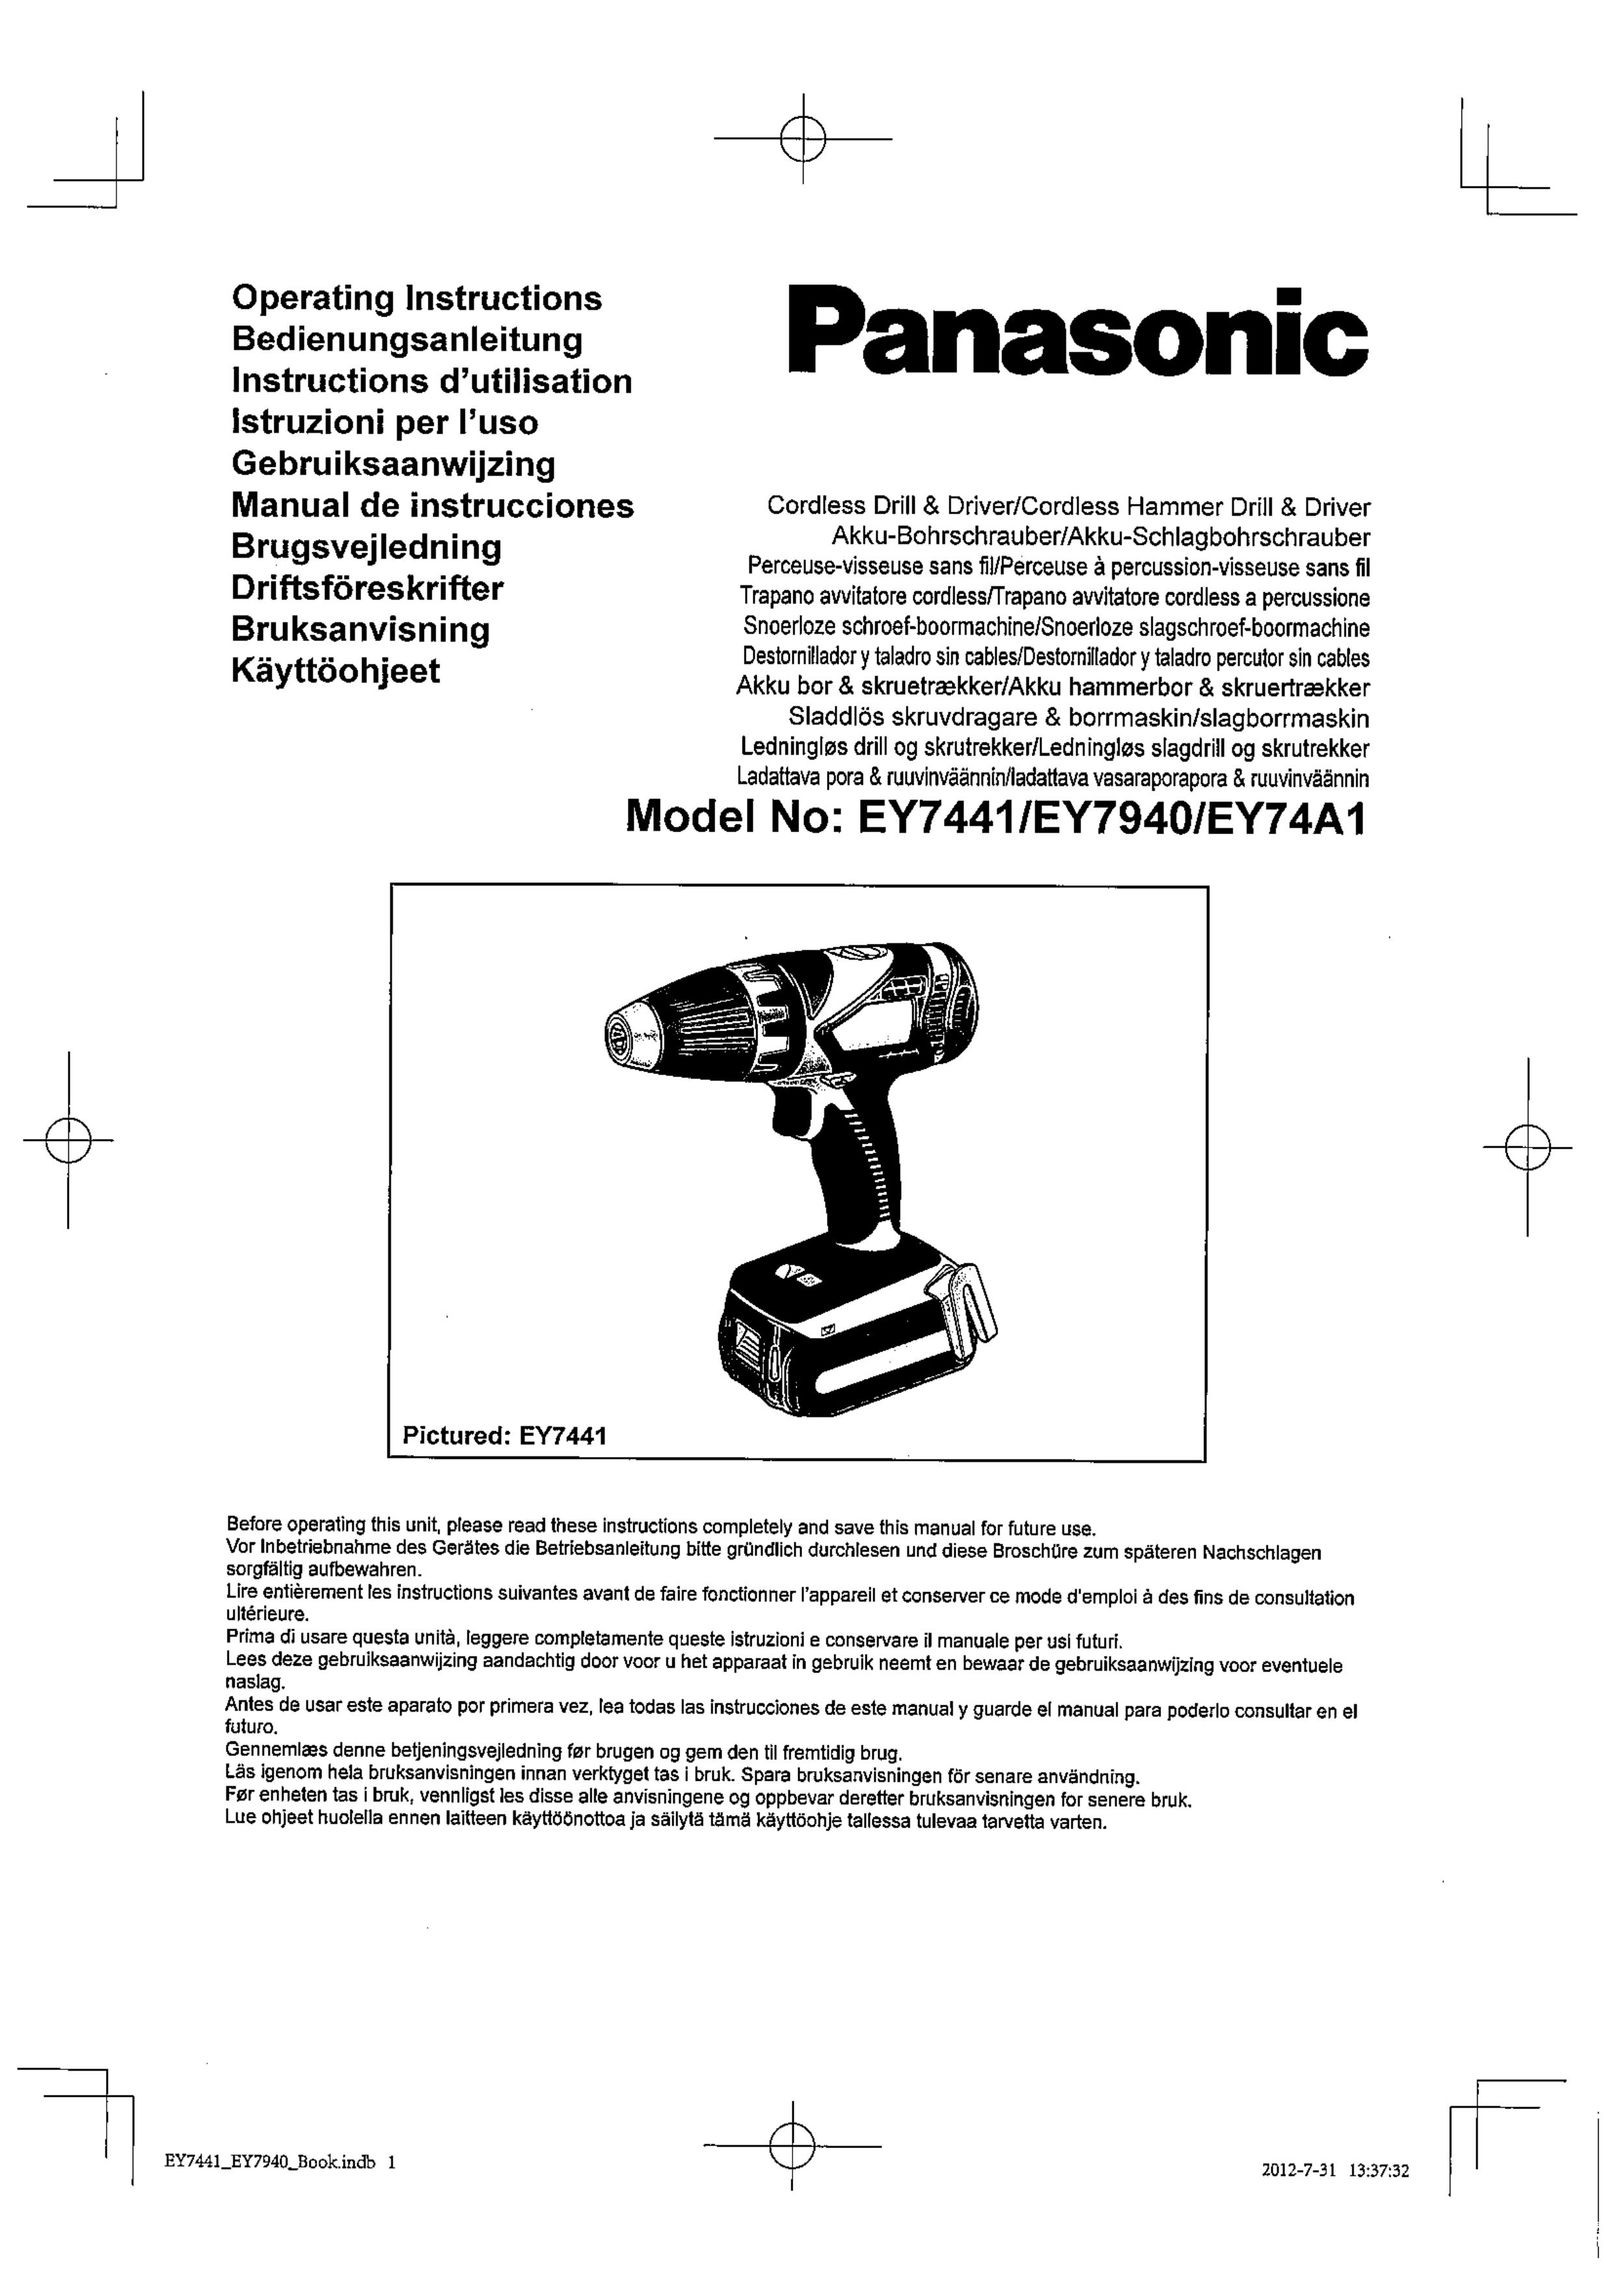 Panasonic ey74a1 Cordless Drill User Manual